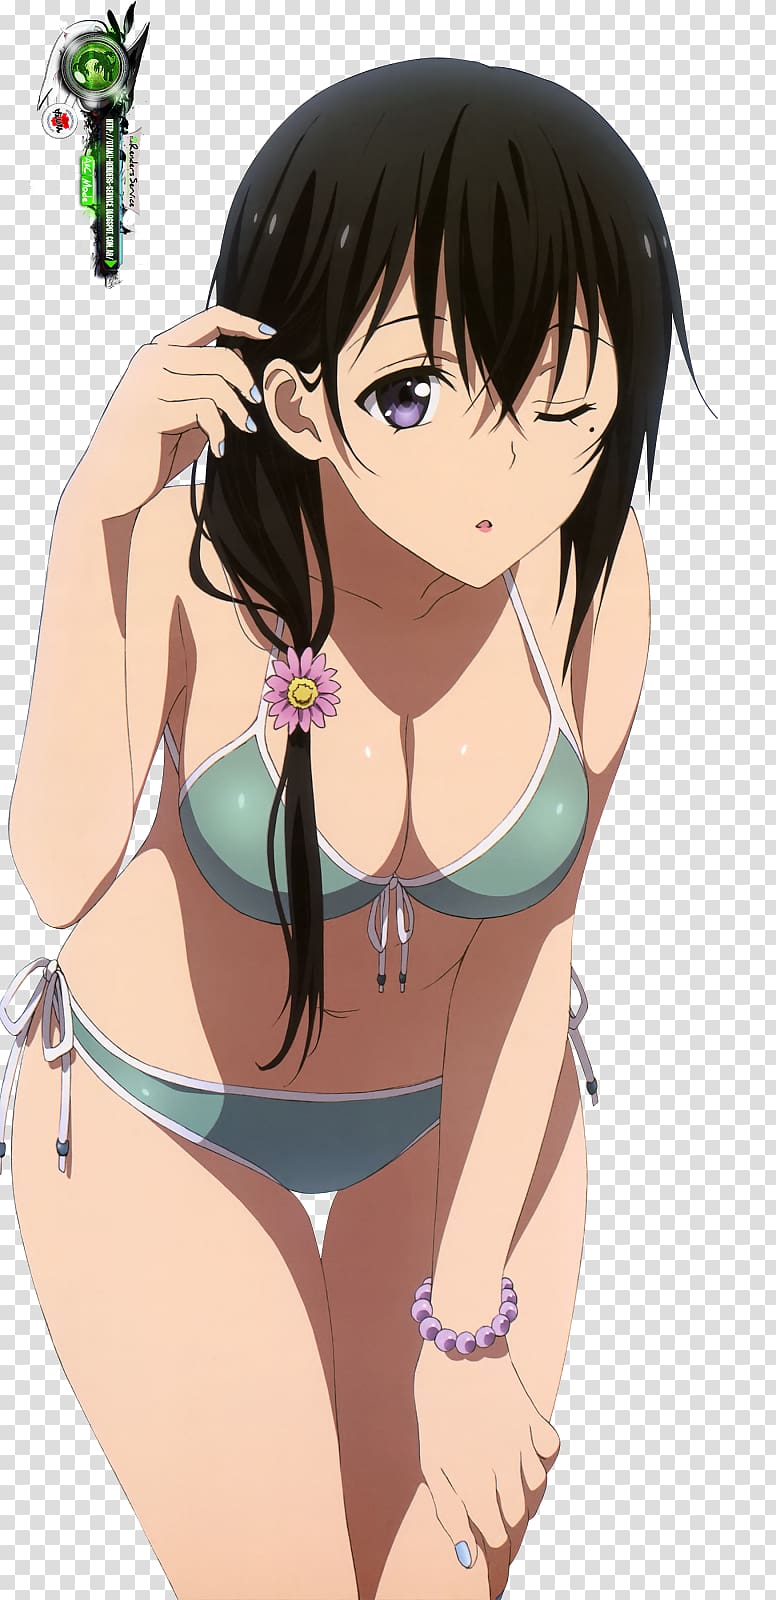 Lexica - Full body of an anime woman wearing bikini with white hair-demhanvico.com.vn